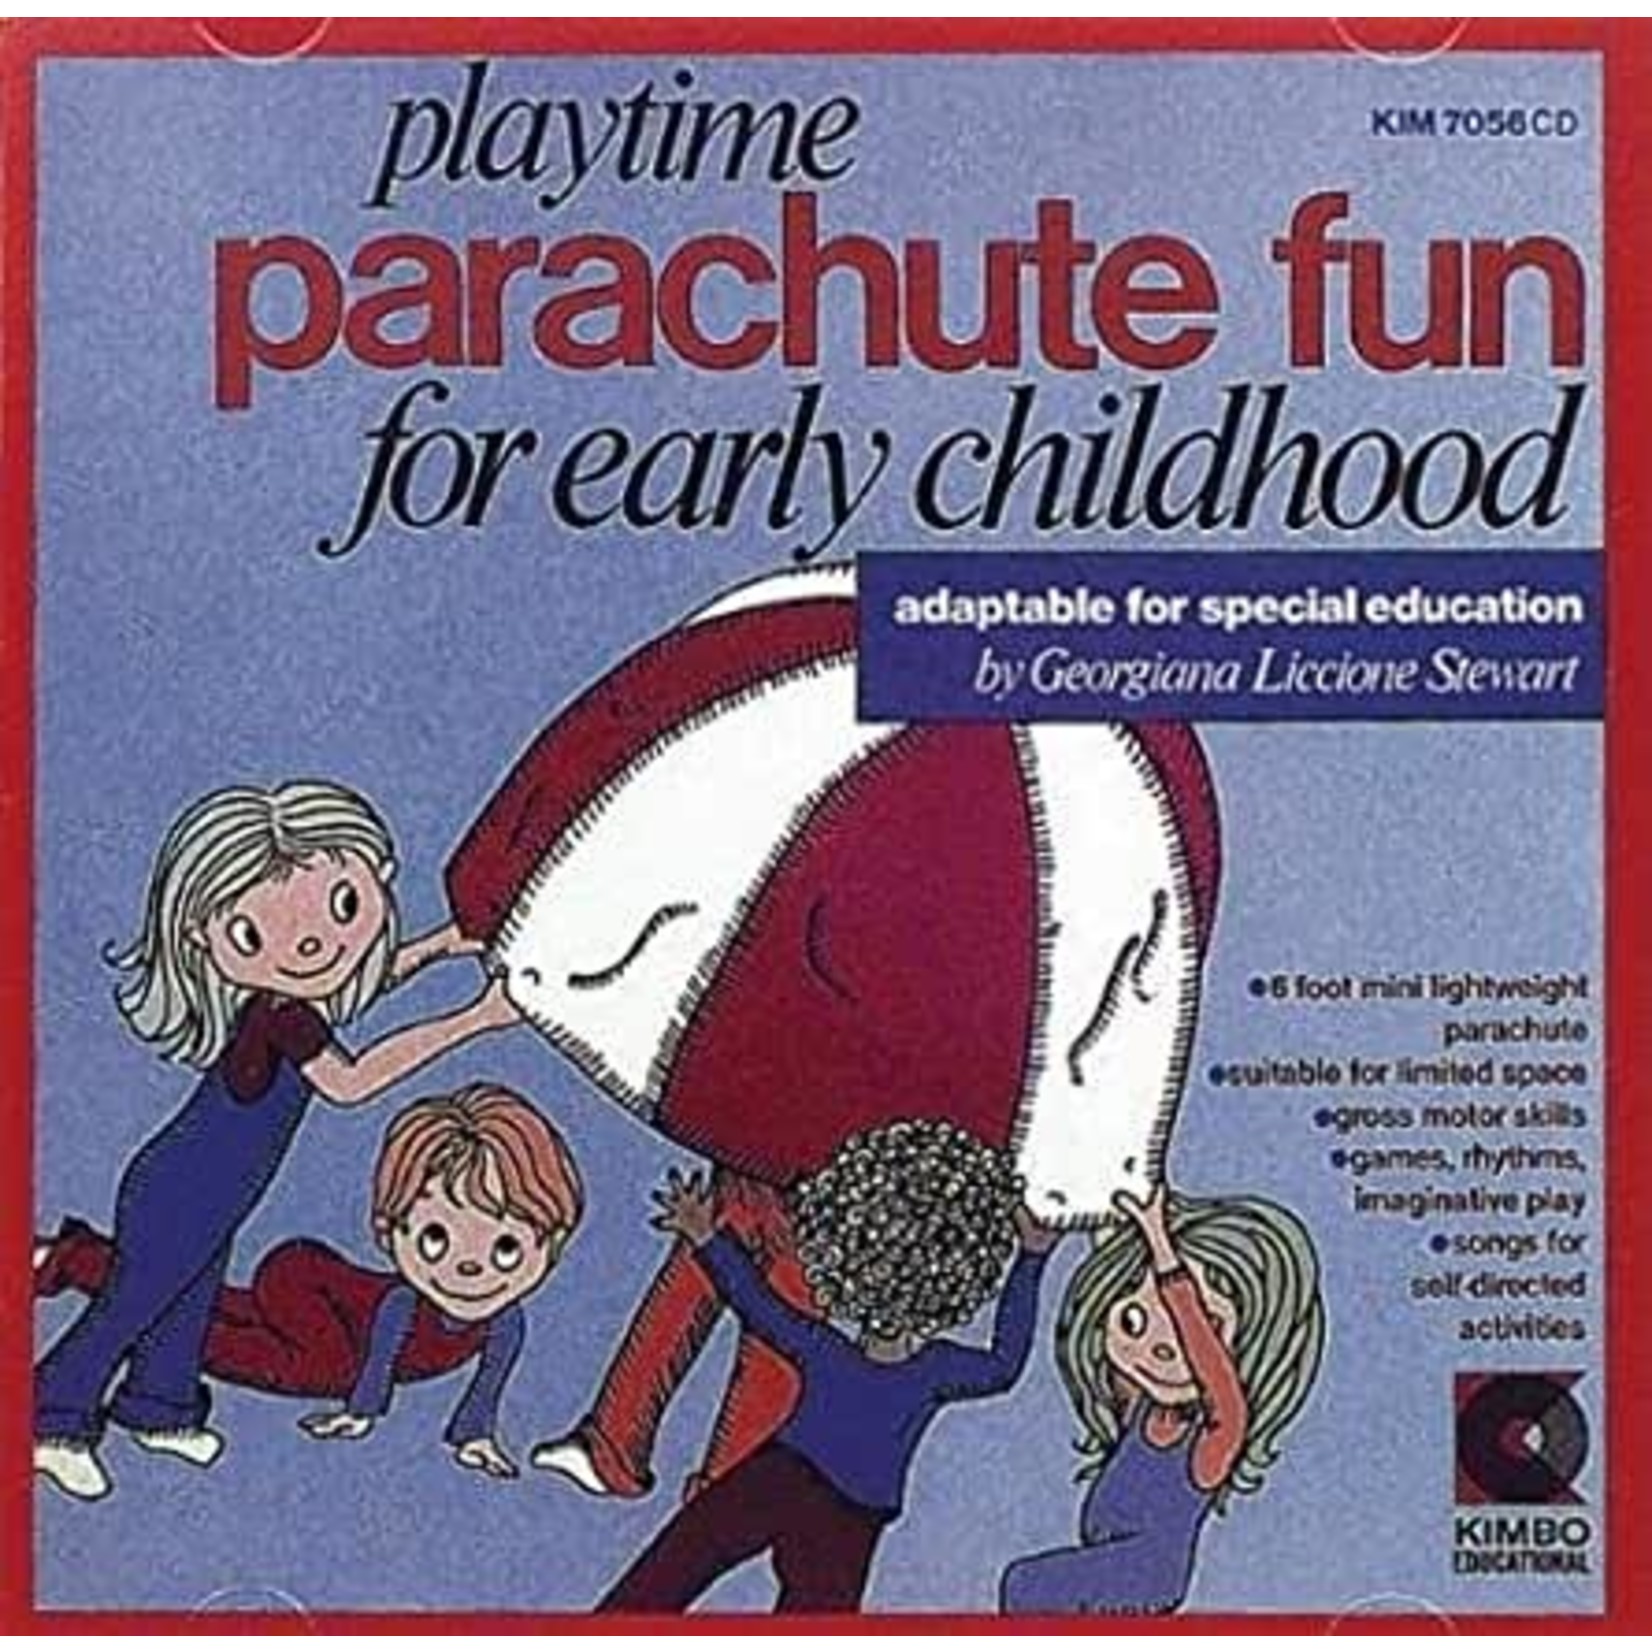 Playtime Parachute Fun CD